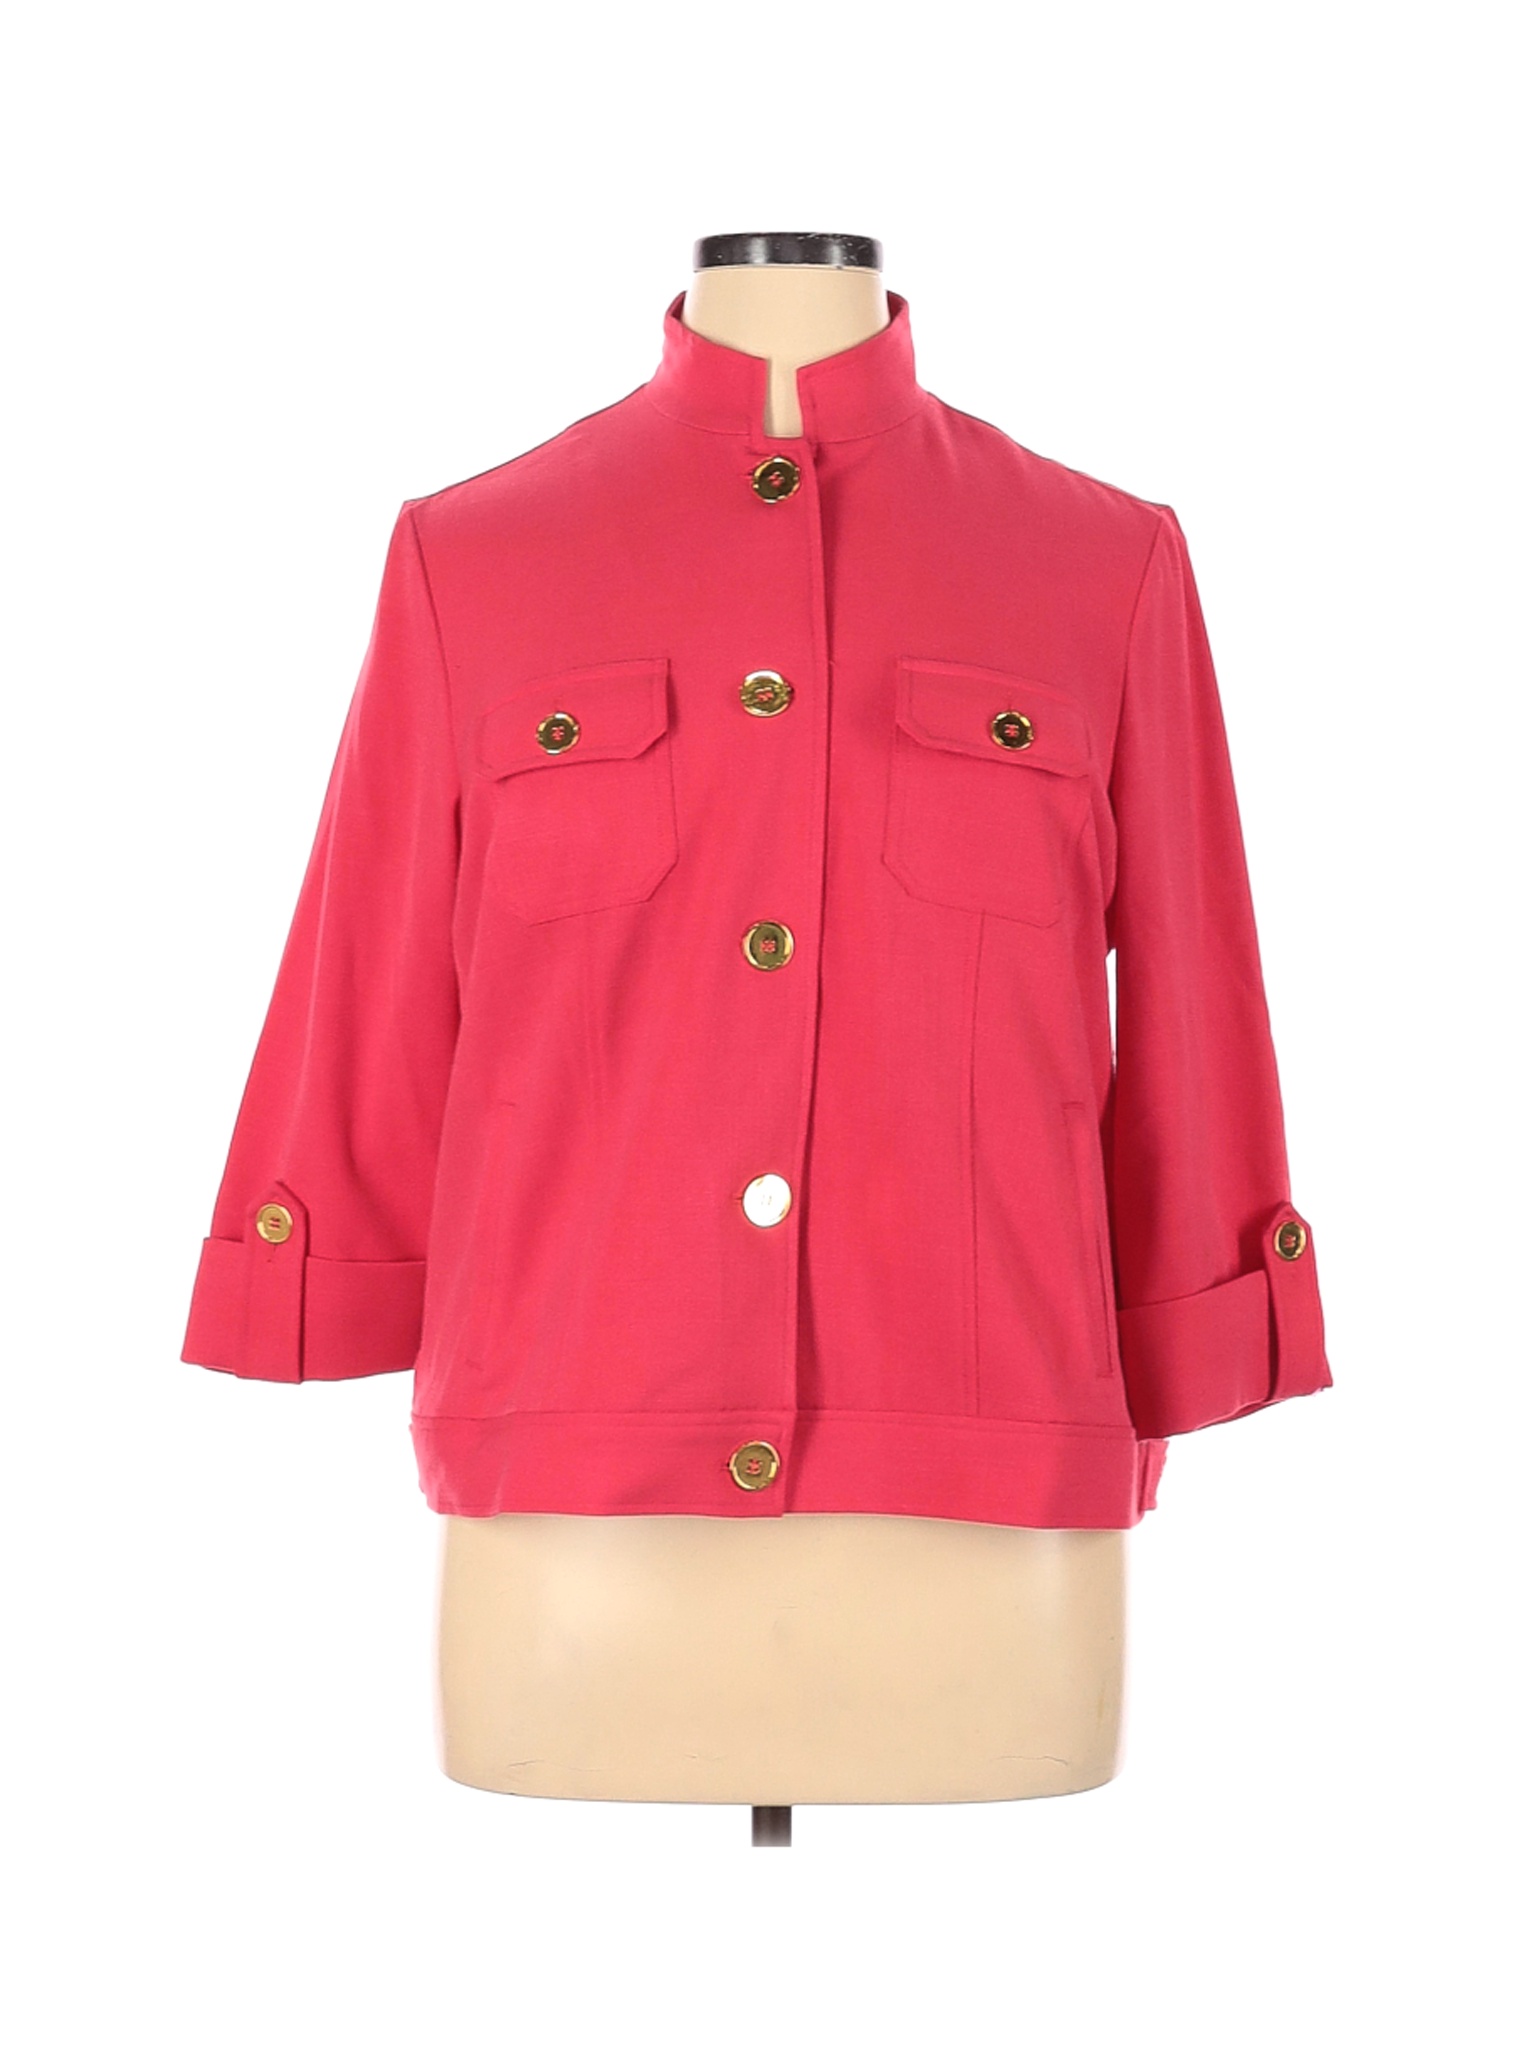 Draper's & Damon's Women Pink Jacket XL Petites | eBay